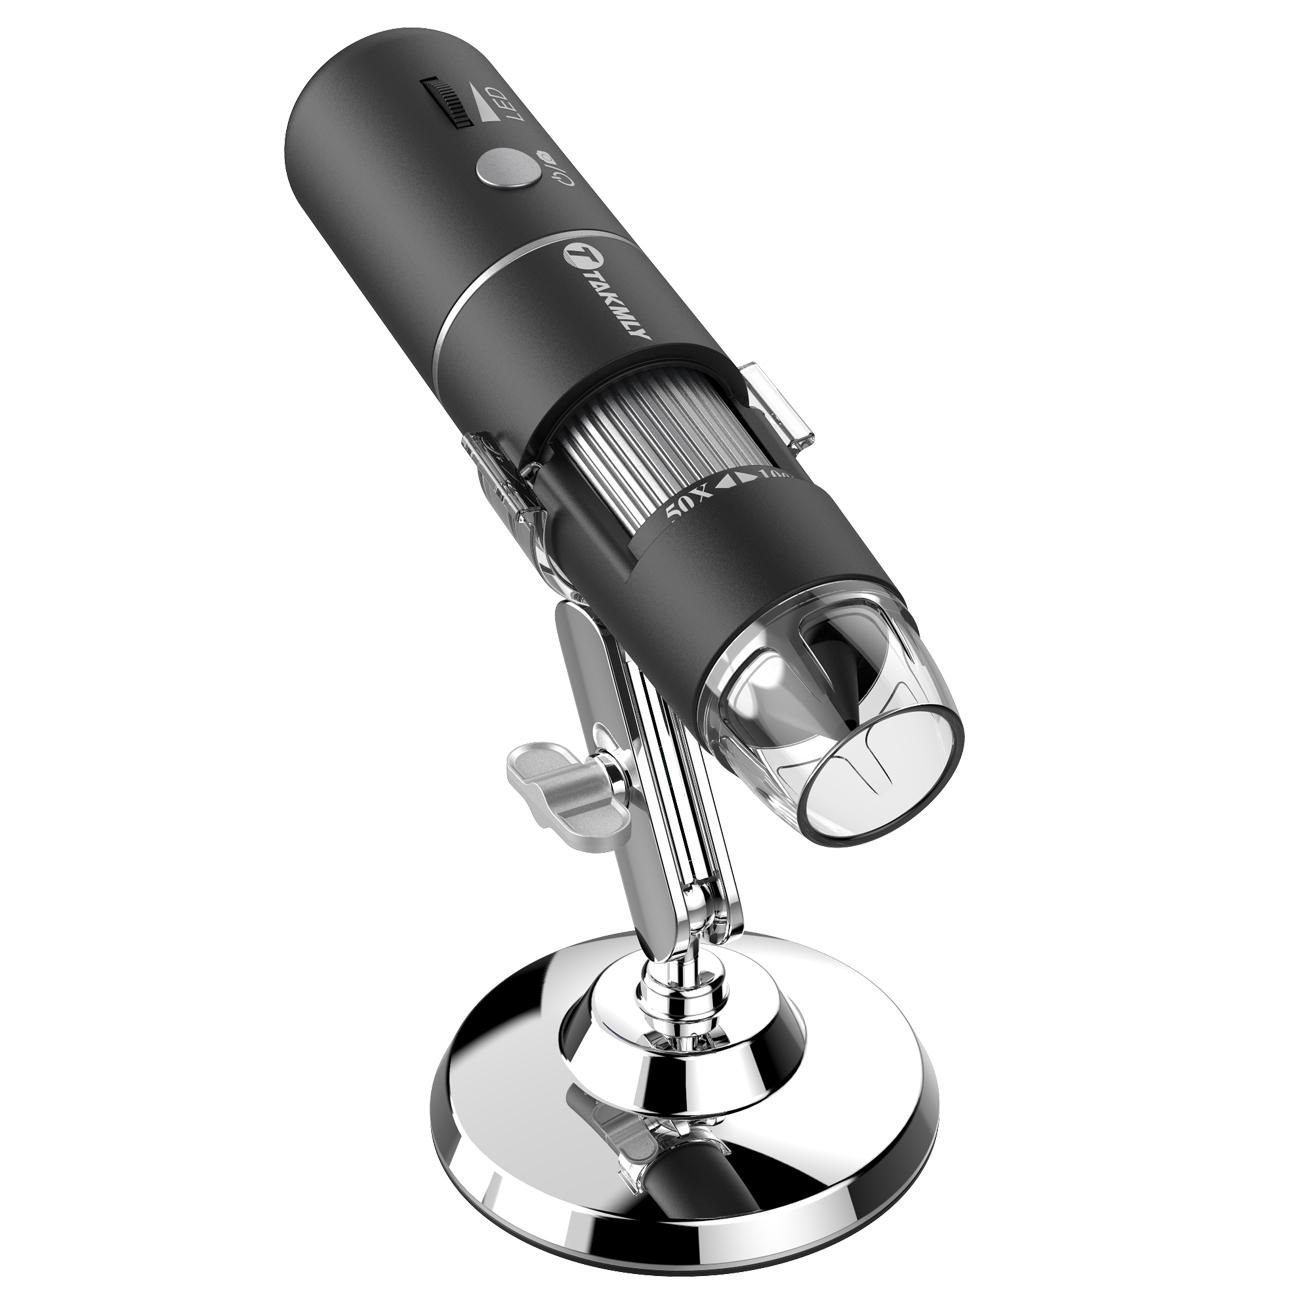 500x Portable USB Digital Microscope